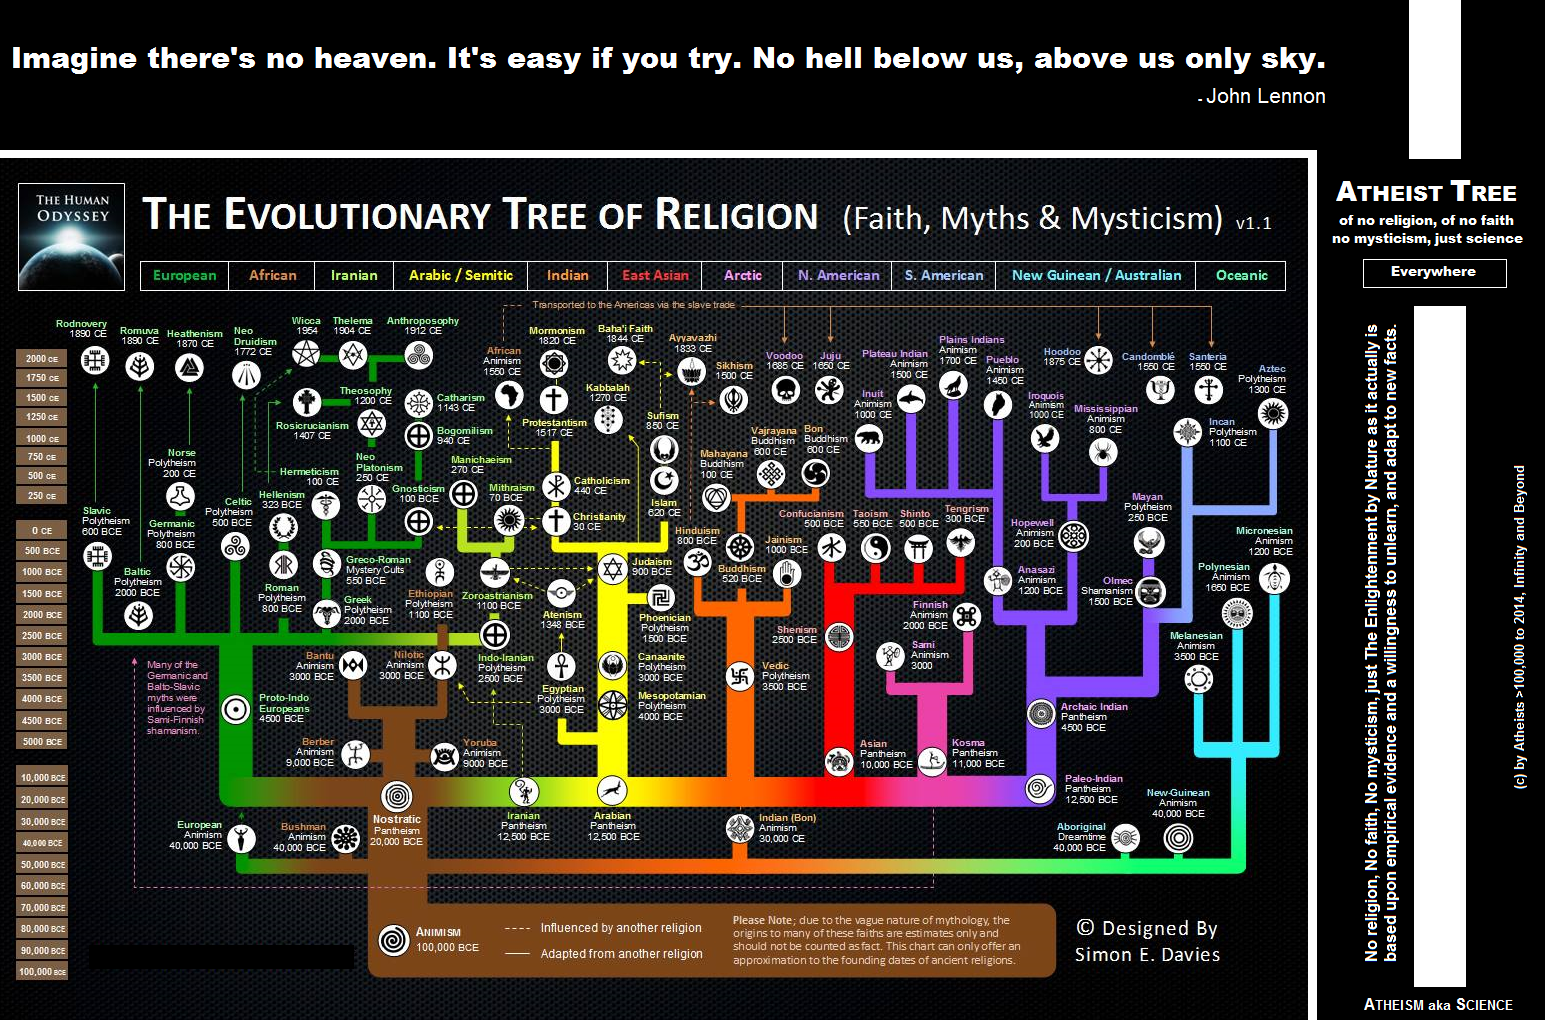 Atheism aka Science vs Tree of Religion